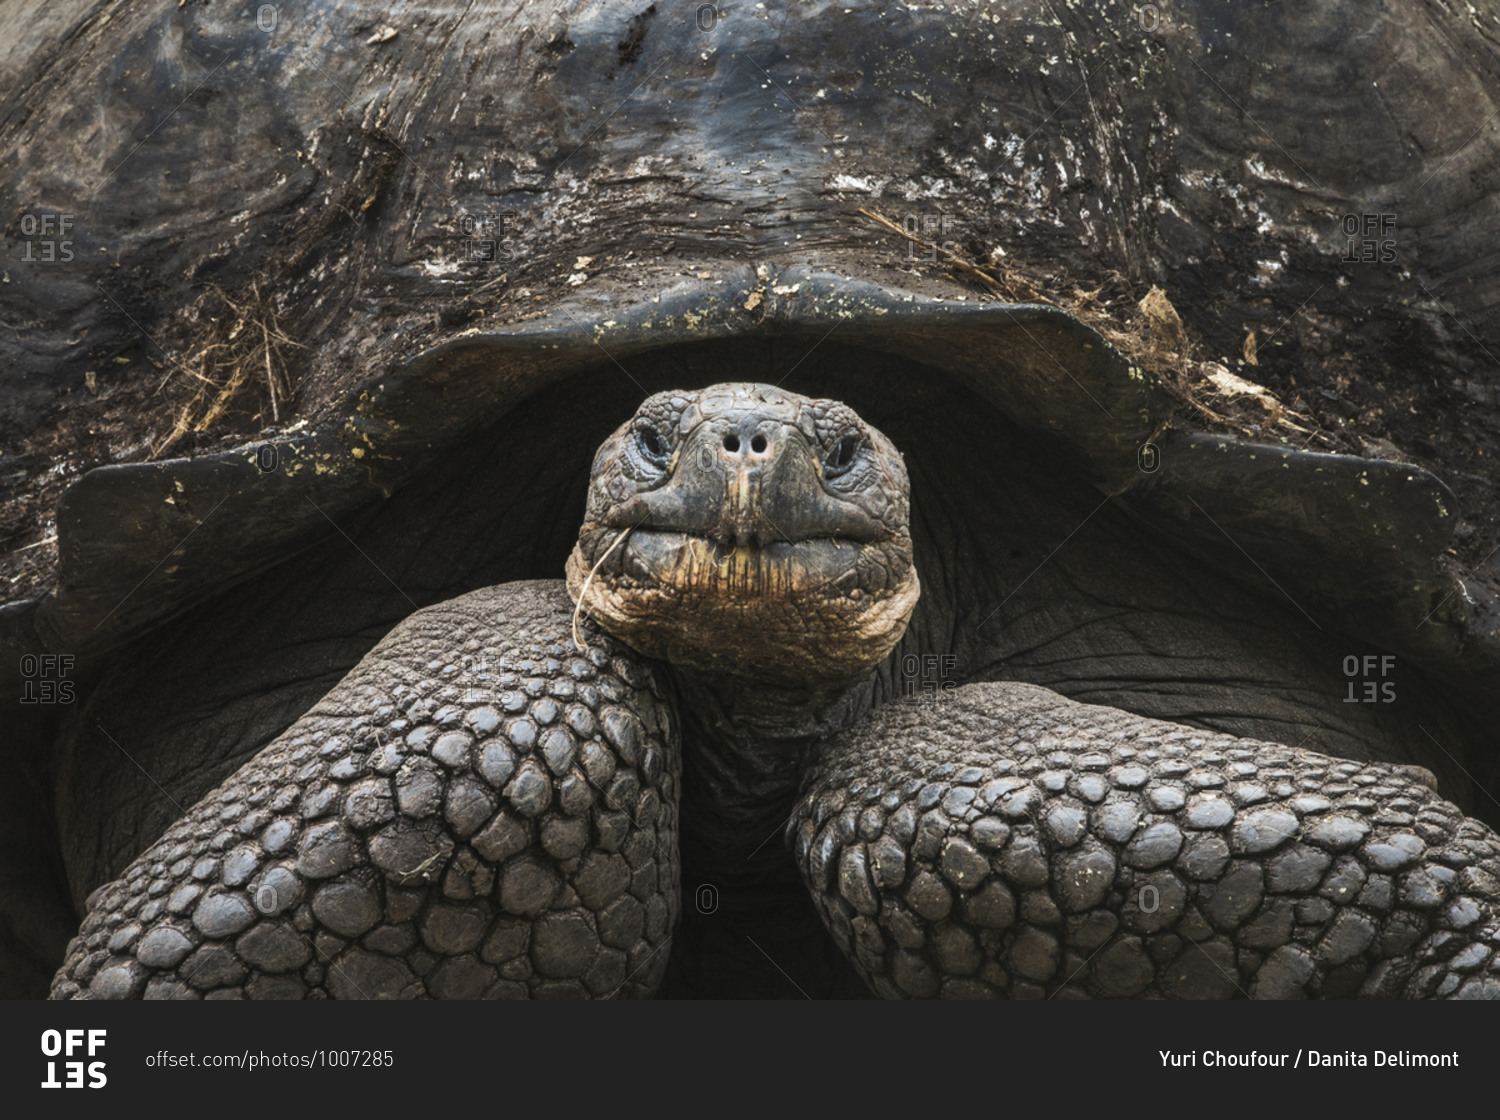 Ecuador, Galapagos Islands, Santa Cruz highlands. Galapagos giant tortoise portrait.